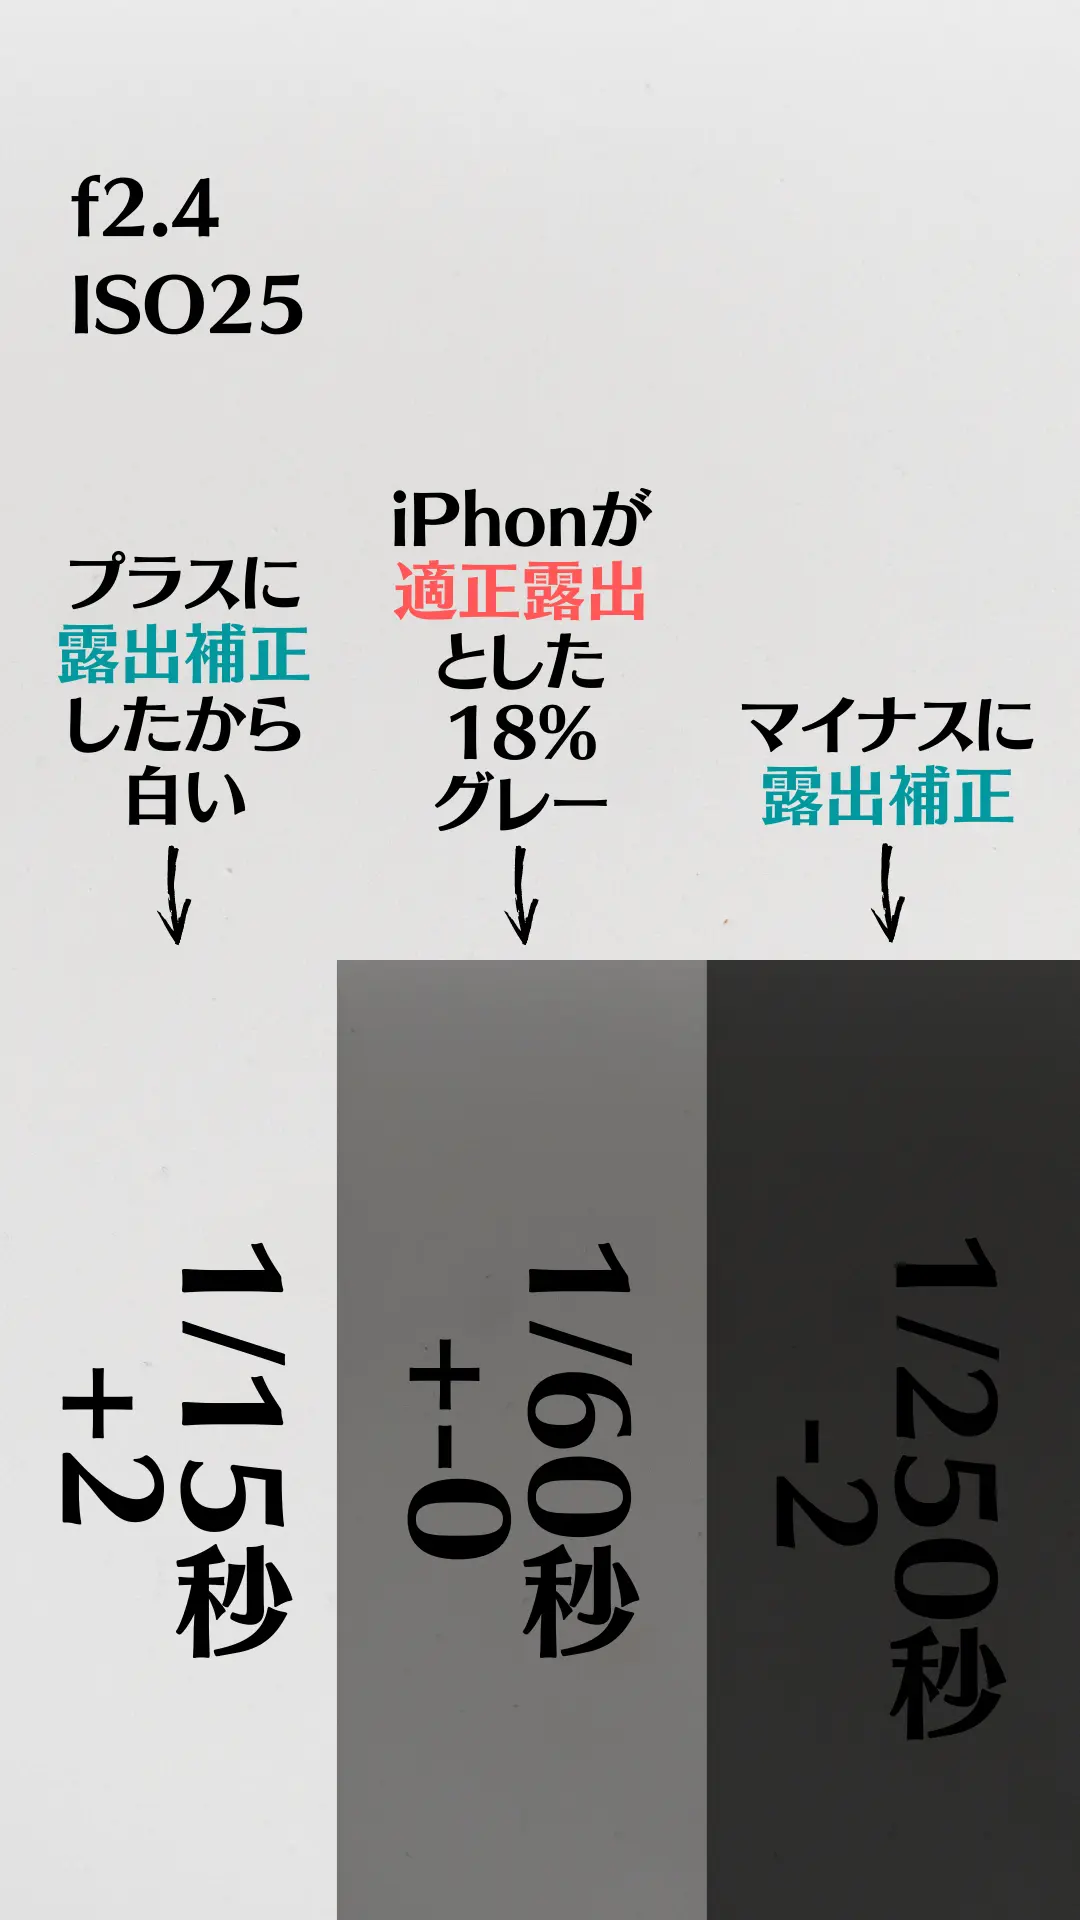 iPhoneで適正露出と露出補正を比べた比較図の写真